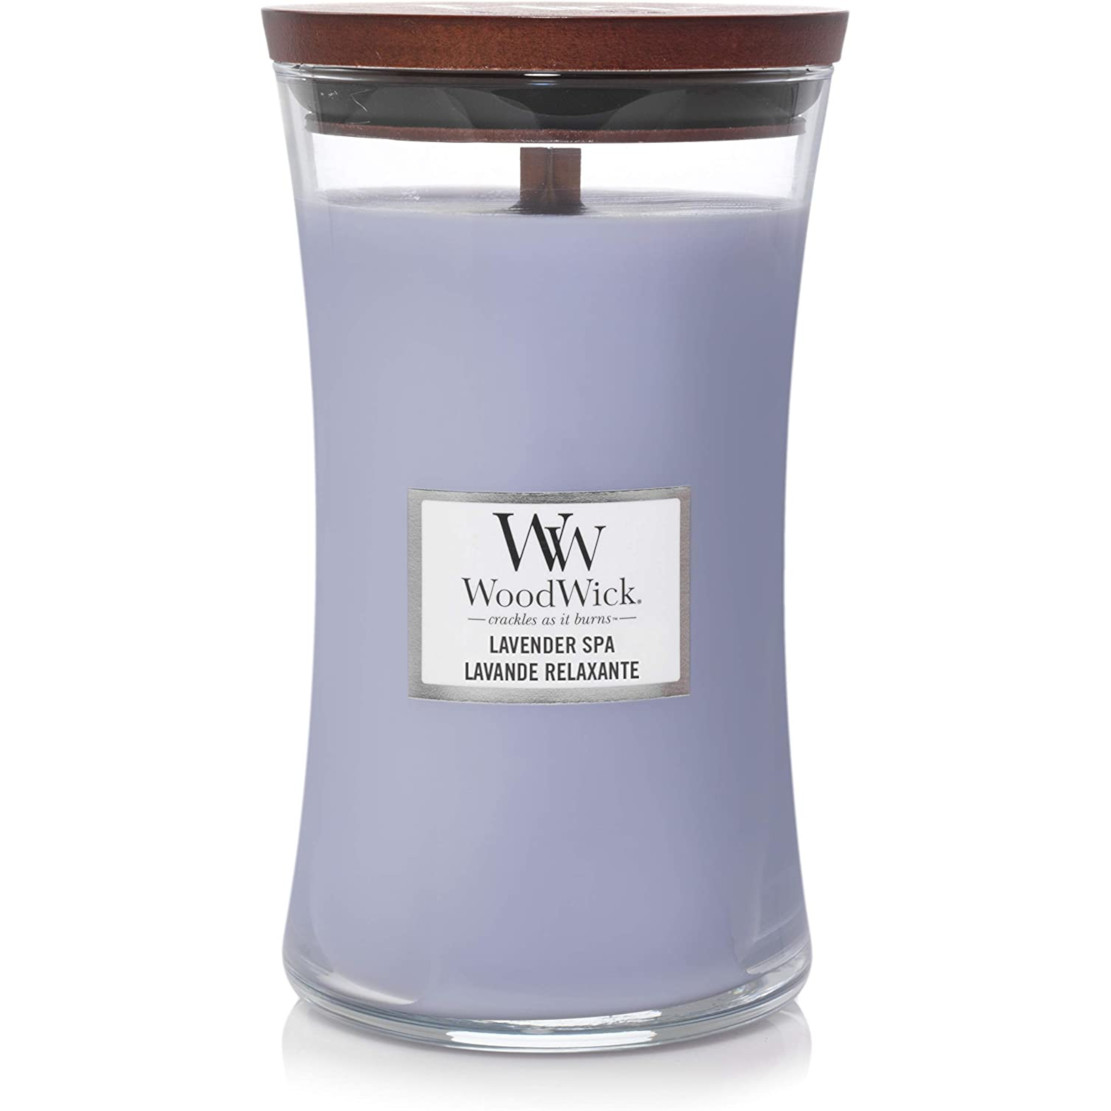 Woodwick Lavender Spa Large Jar Candle